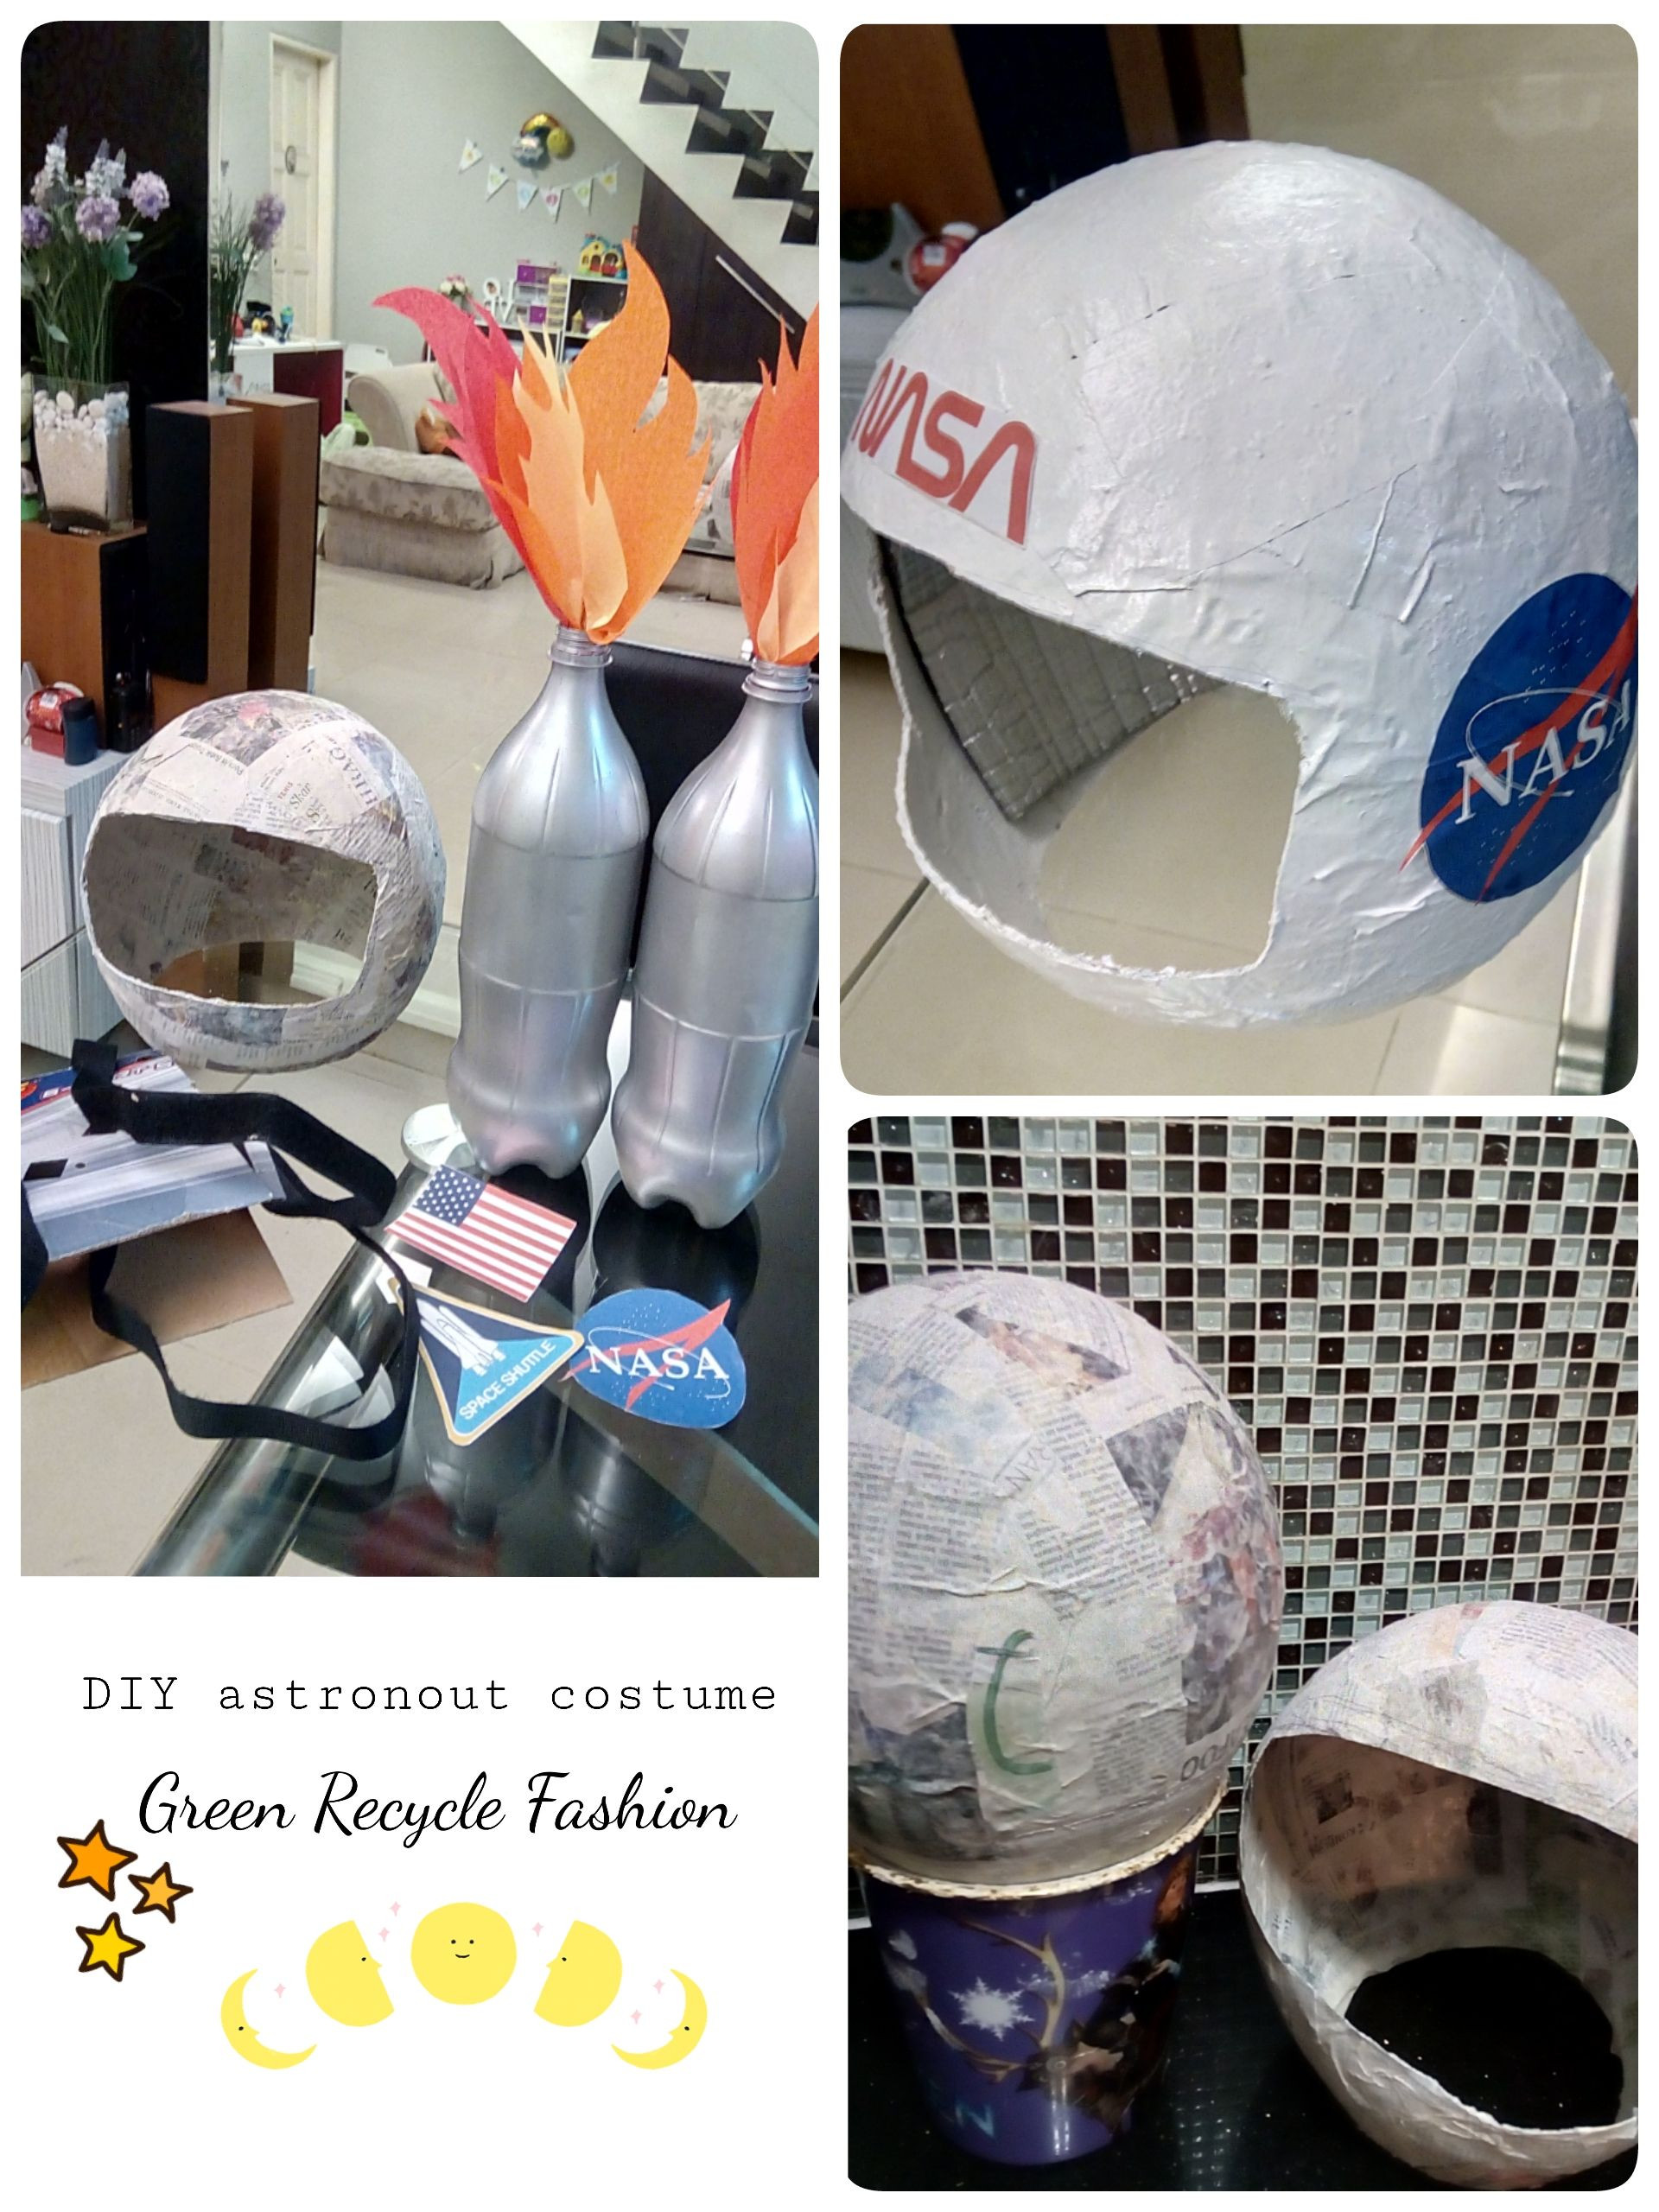 Best ideas about DIY Astronaut Helmet
. Save or Pin Rocket Astronaut Costume for kid space helmet Blast Now.